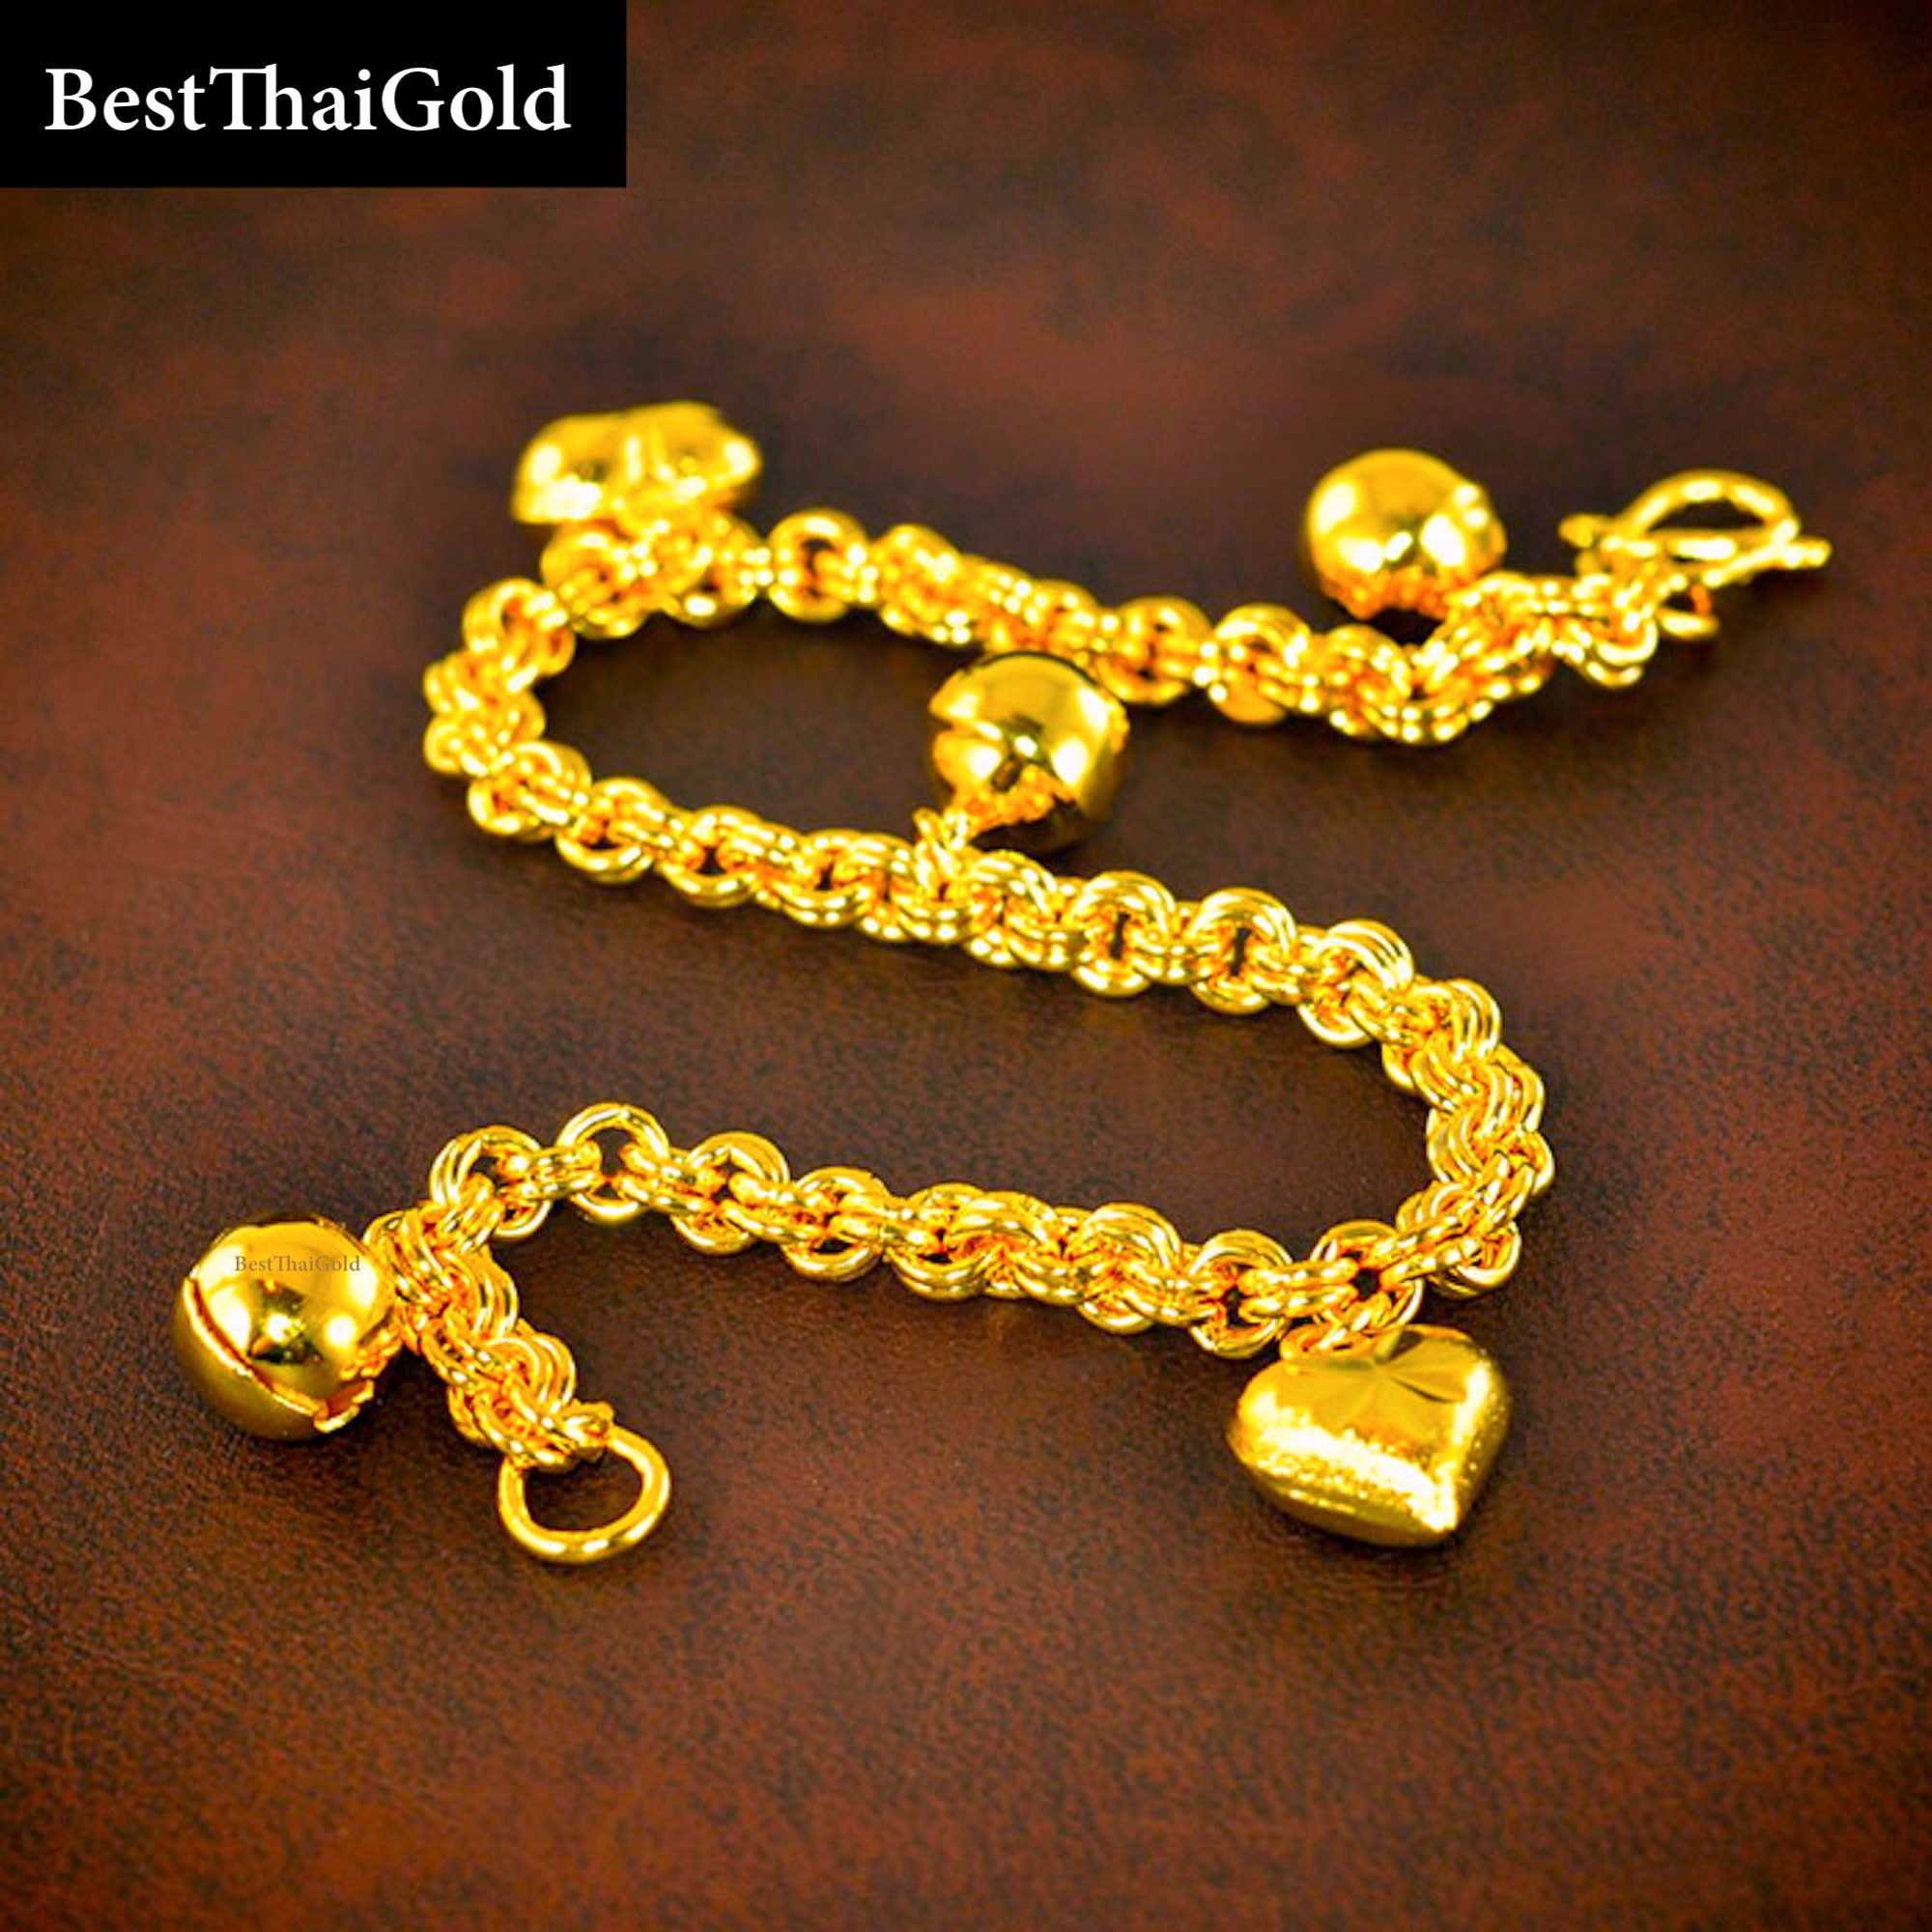 Beads 24k Thai Baht Yellow Gold GP Bracelet Bangle Chain Womens 6.5 -7.5  inch